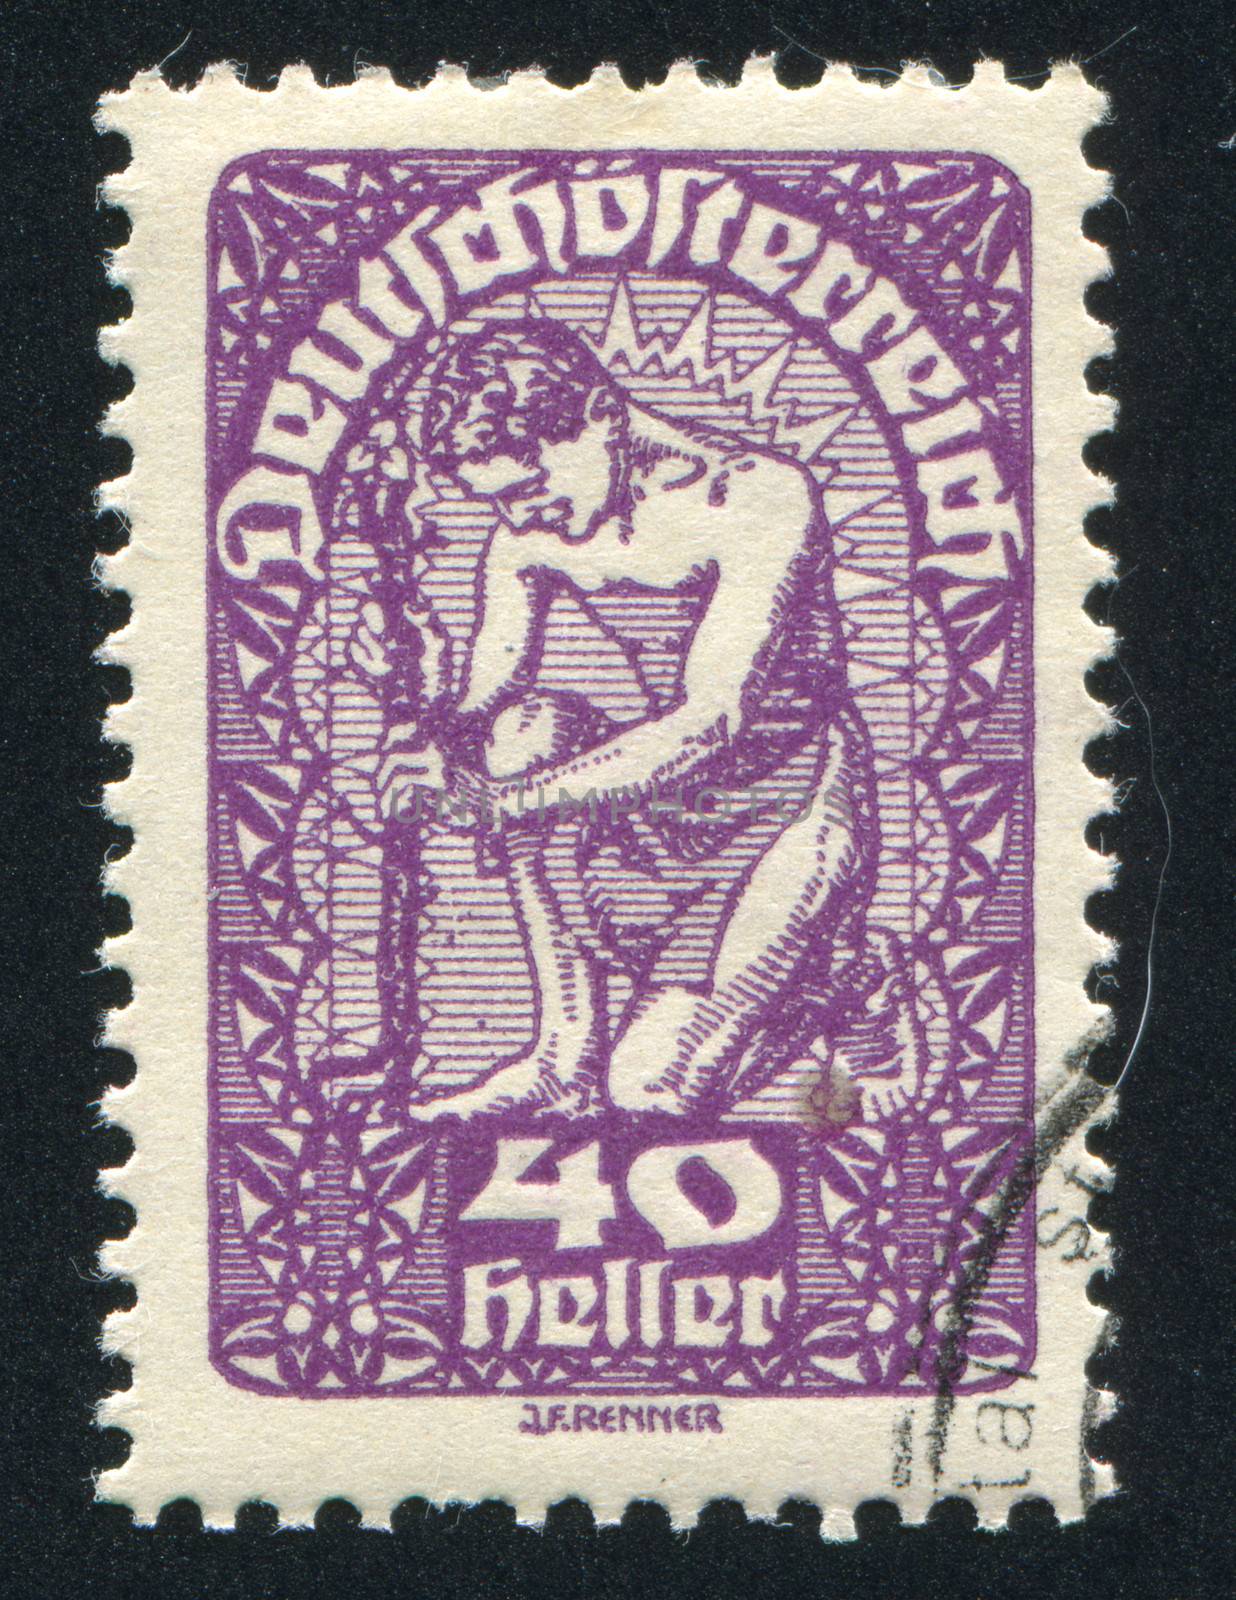 AUSTRIA - CIRCA 1919: stamp printed by Austria, shows Man and flower, circa 1919